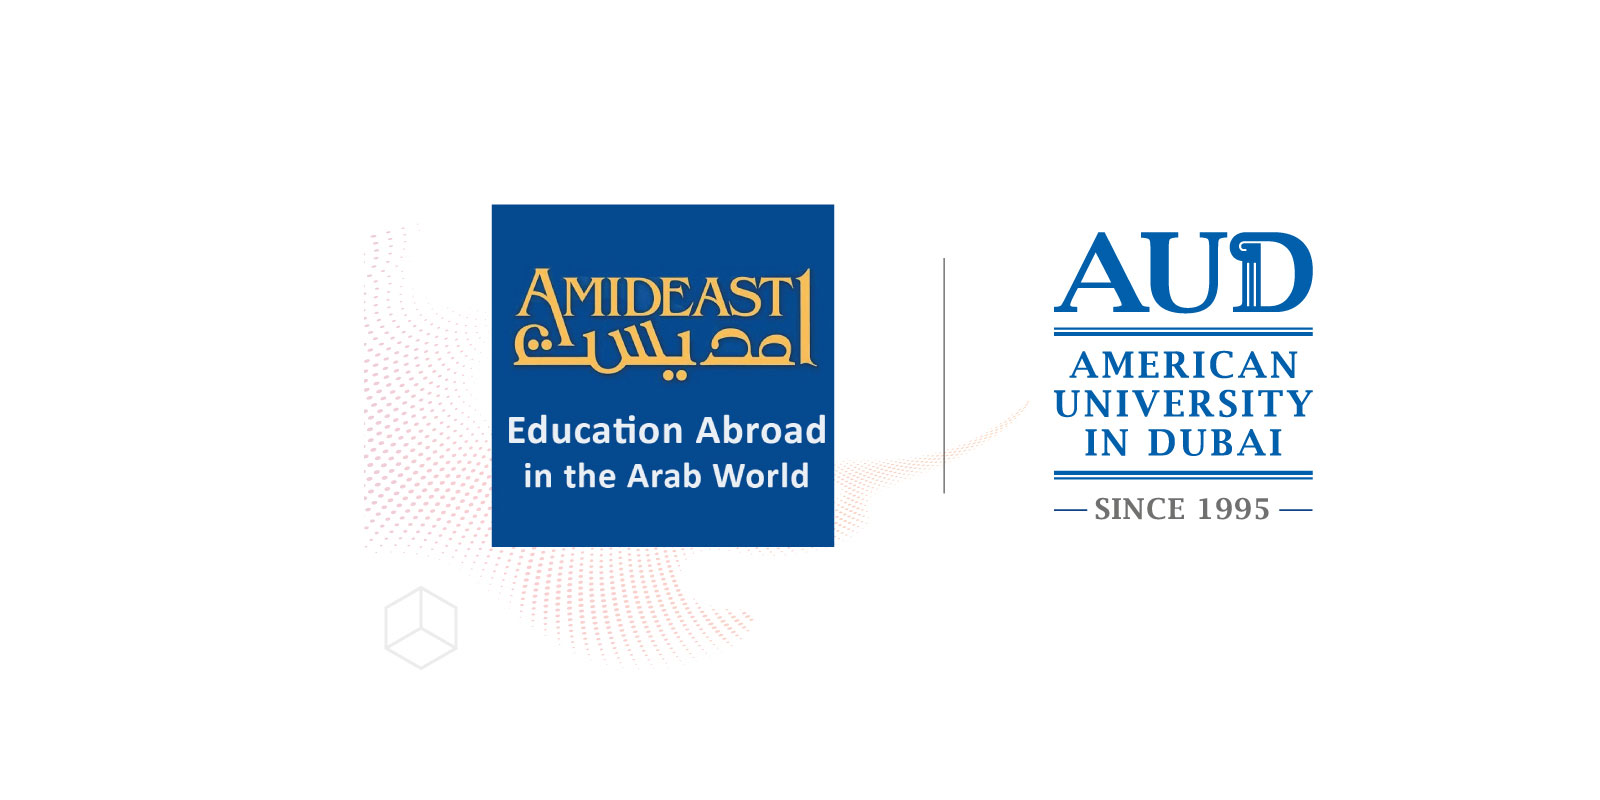 AMIDEAST and AUD Partnership